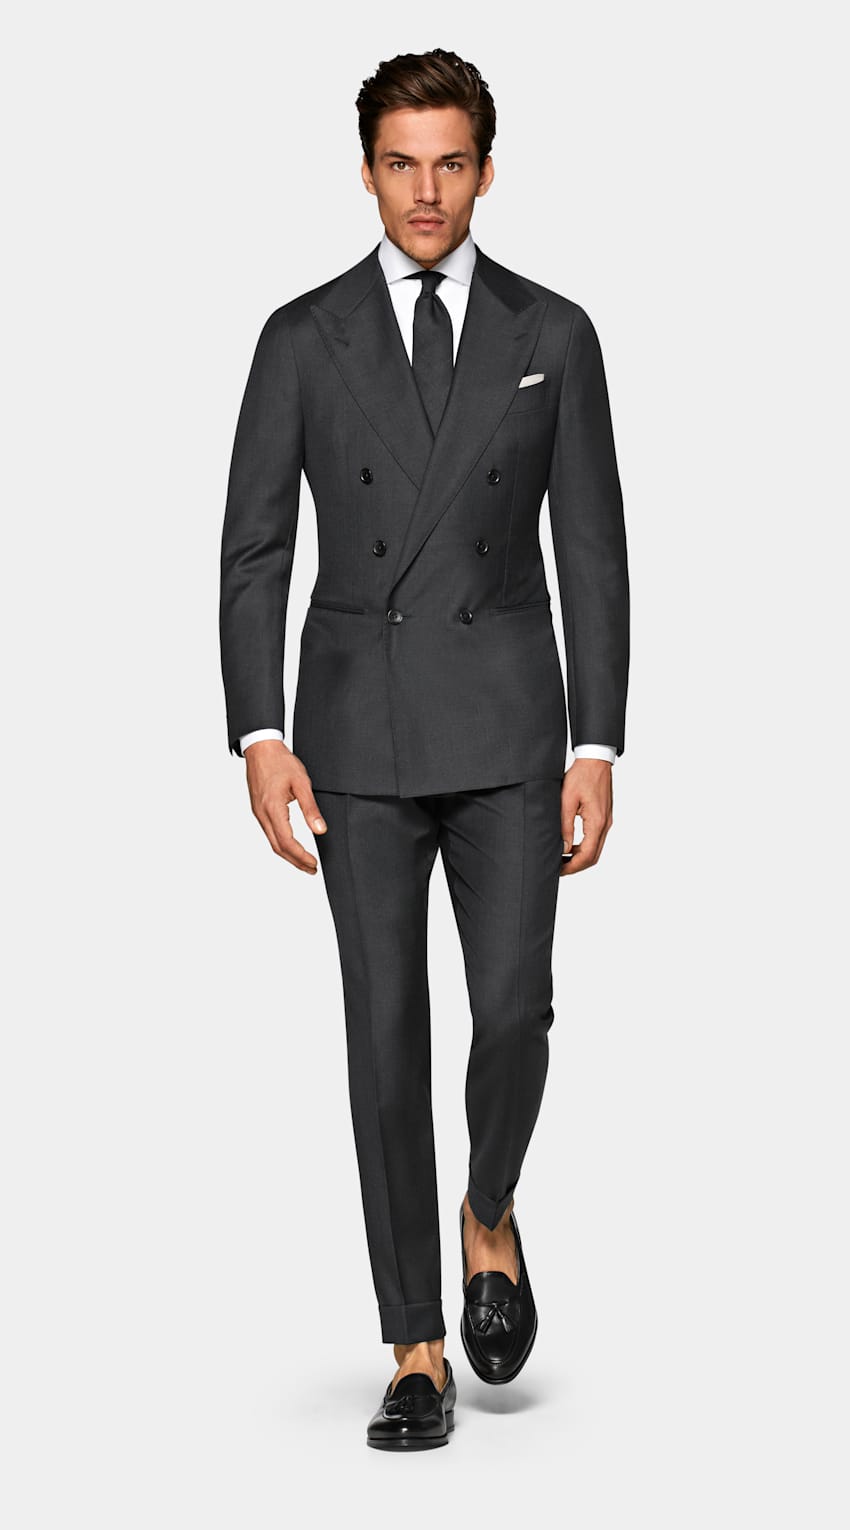 Dancer Sidewalk Bore Dark Grey Havana Suit | Pure Wool S110's Double Breasted | SUITSUPPLY US